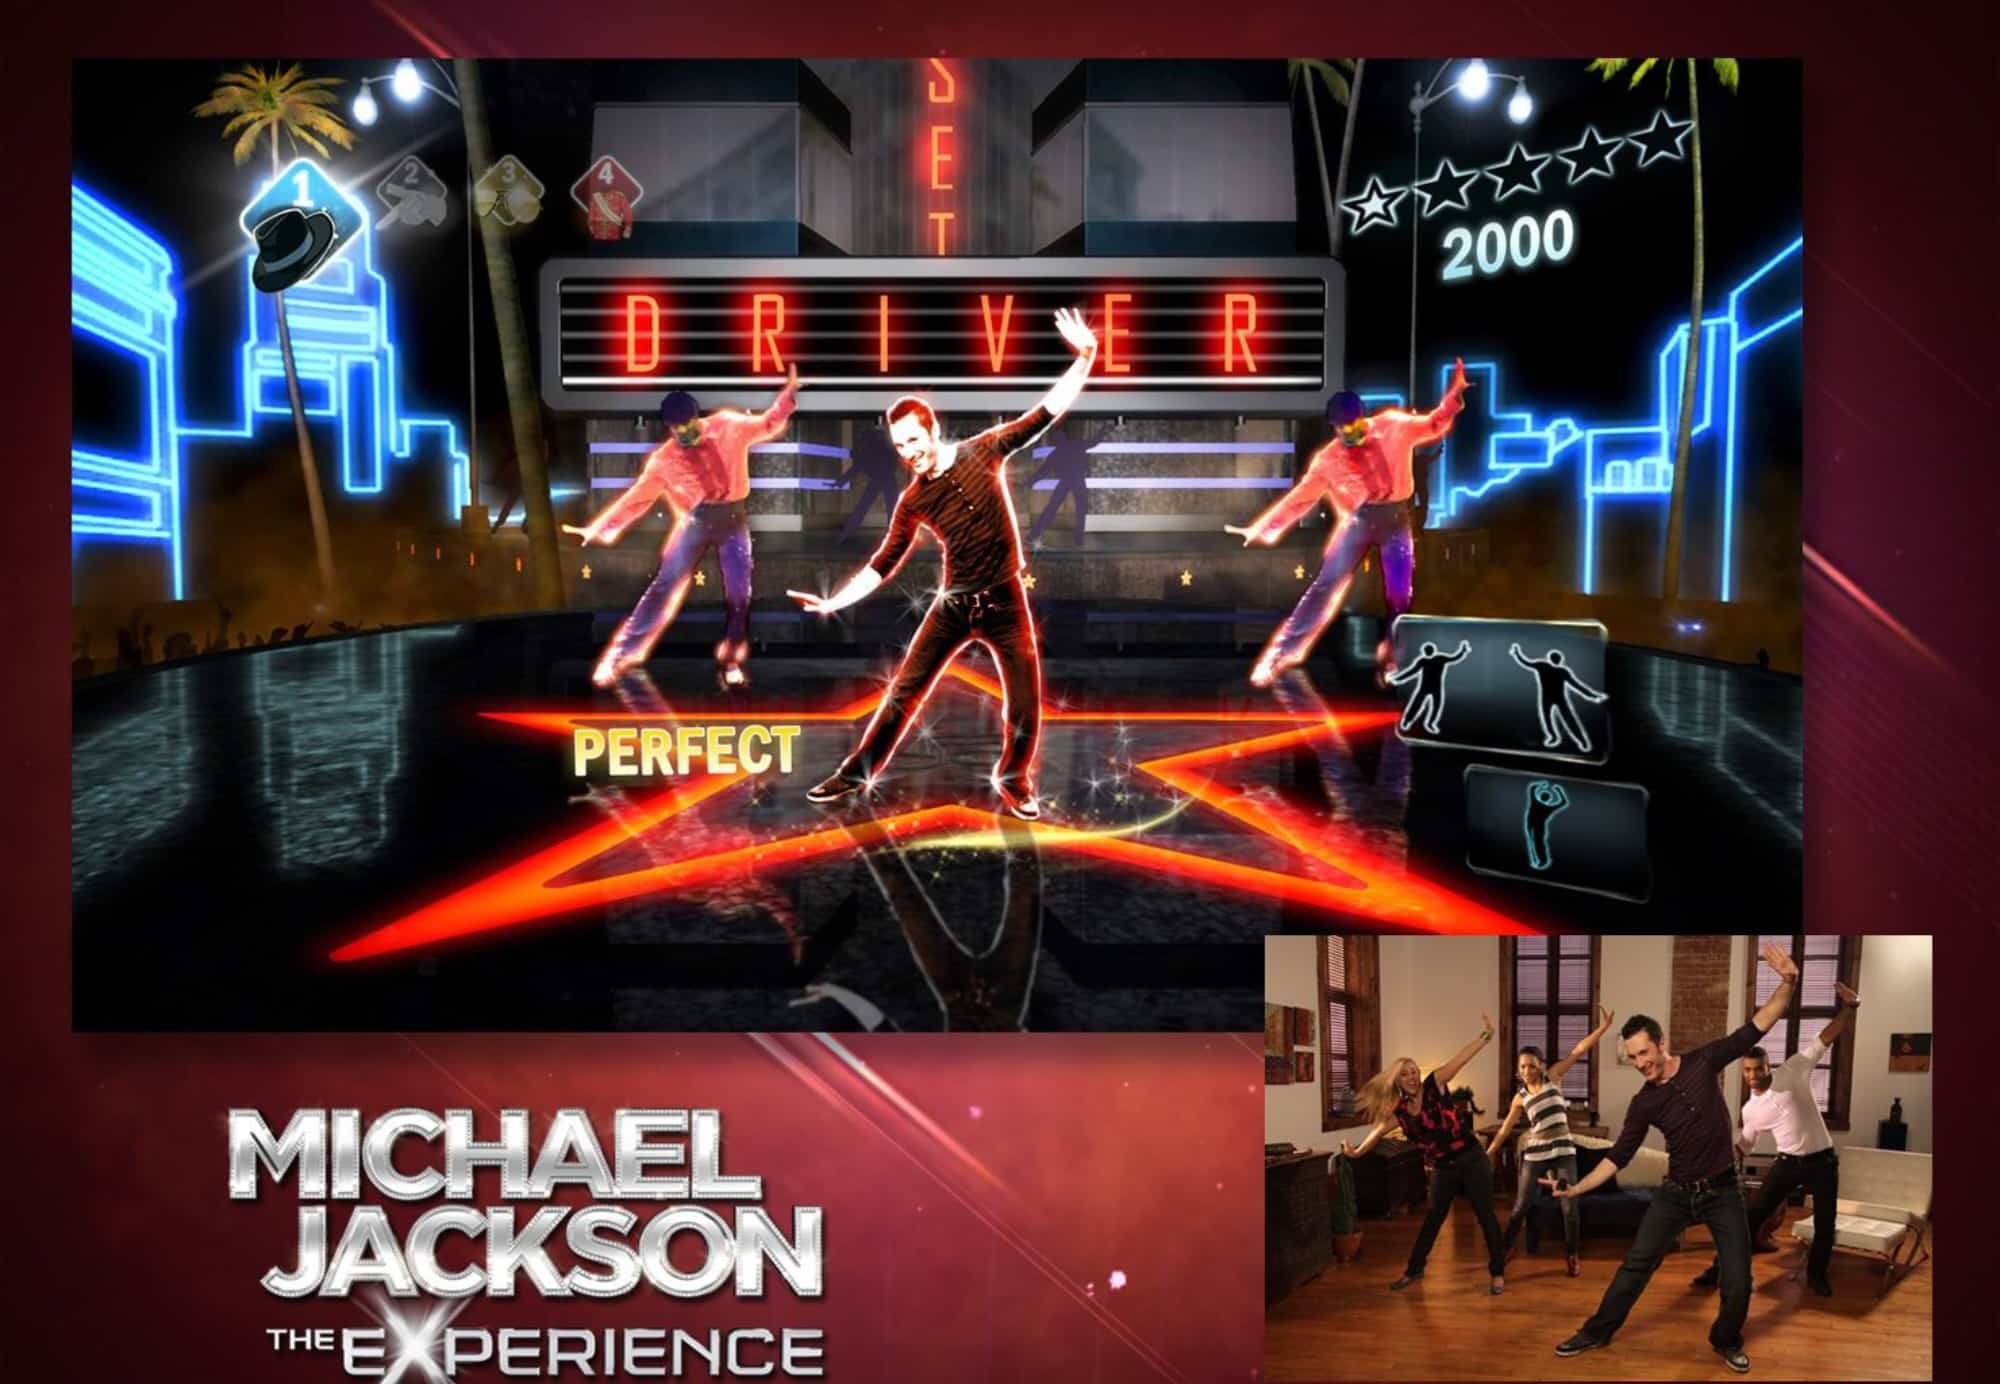 Michael Jackson The Experience Achievements And Trophies List